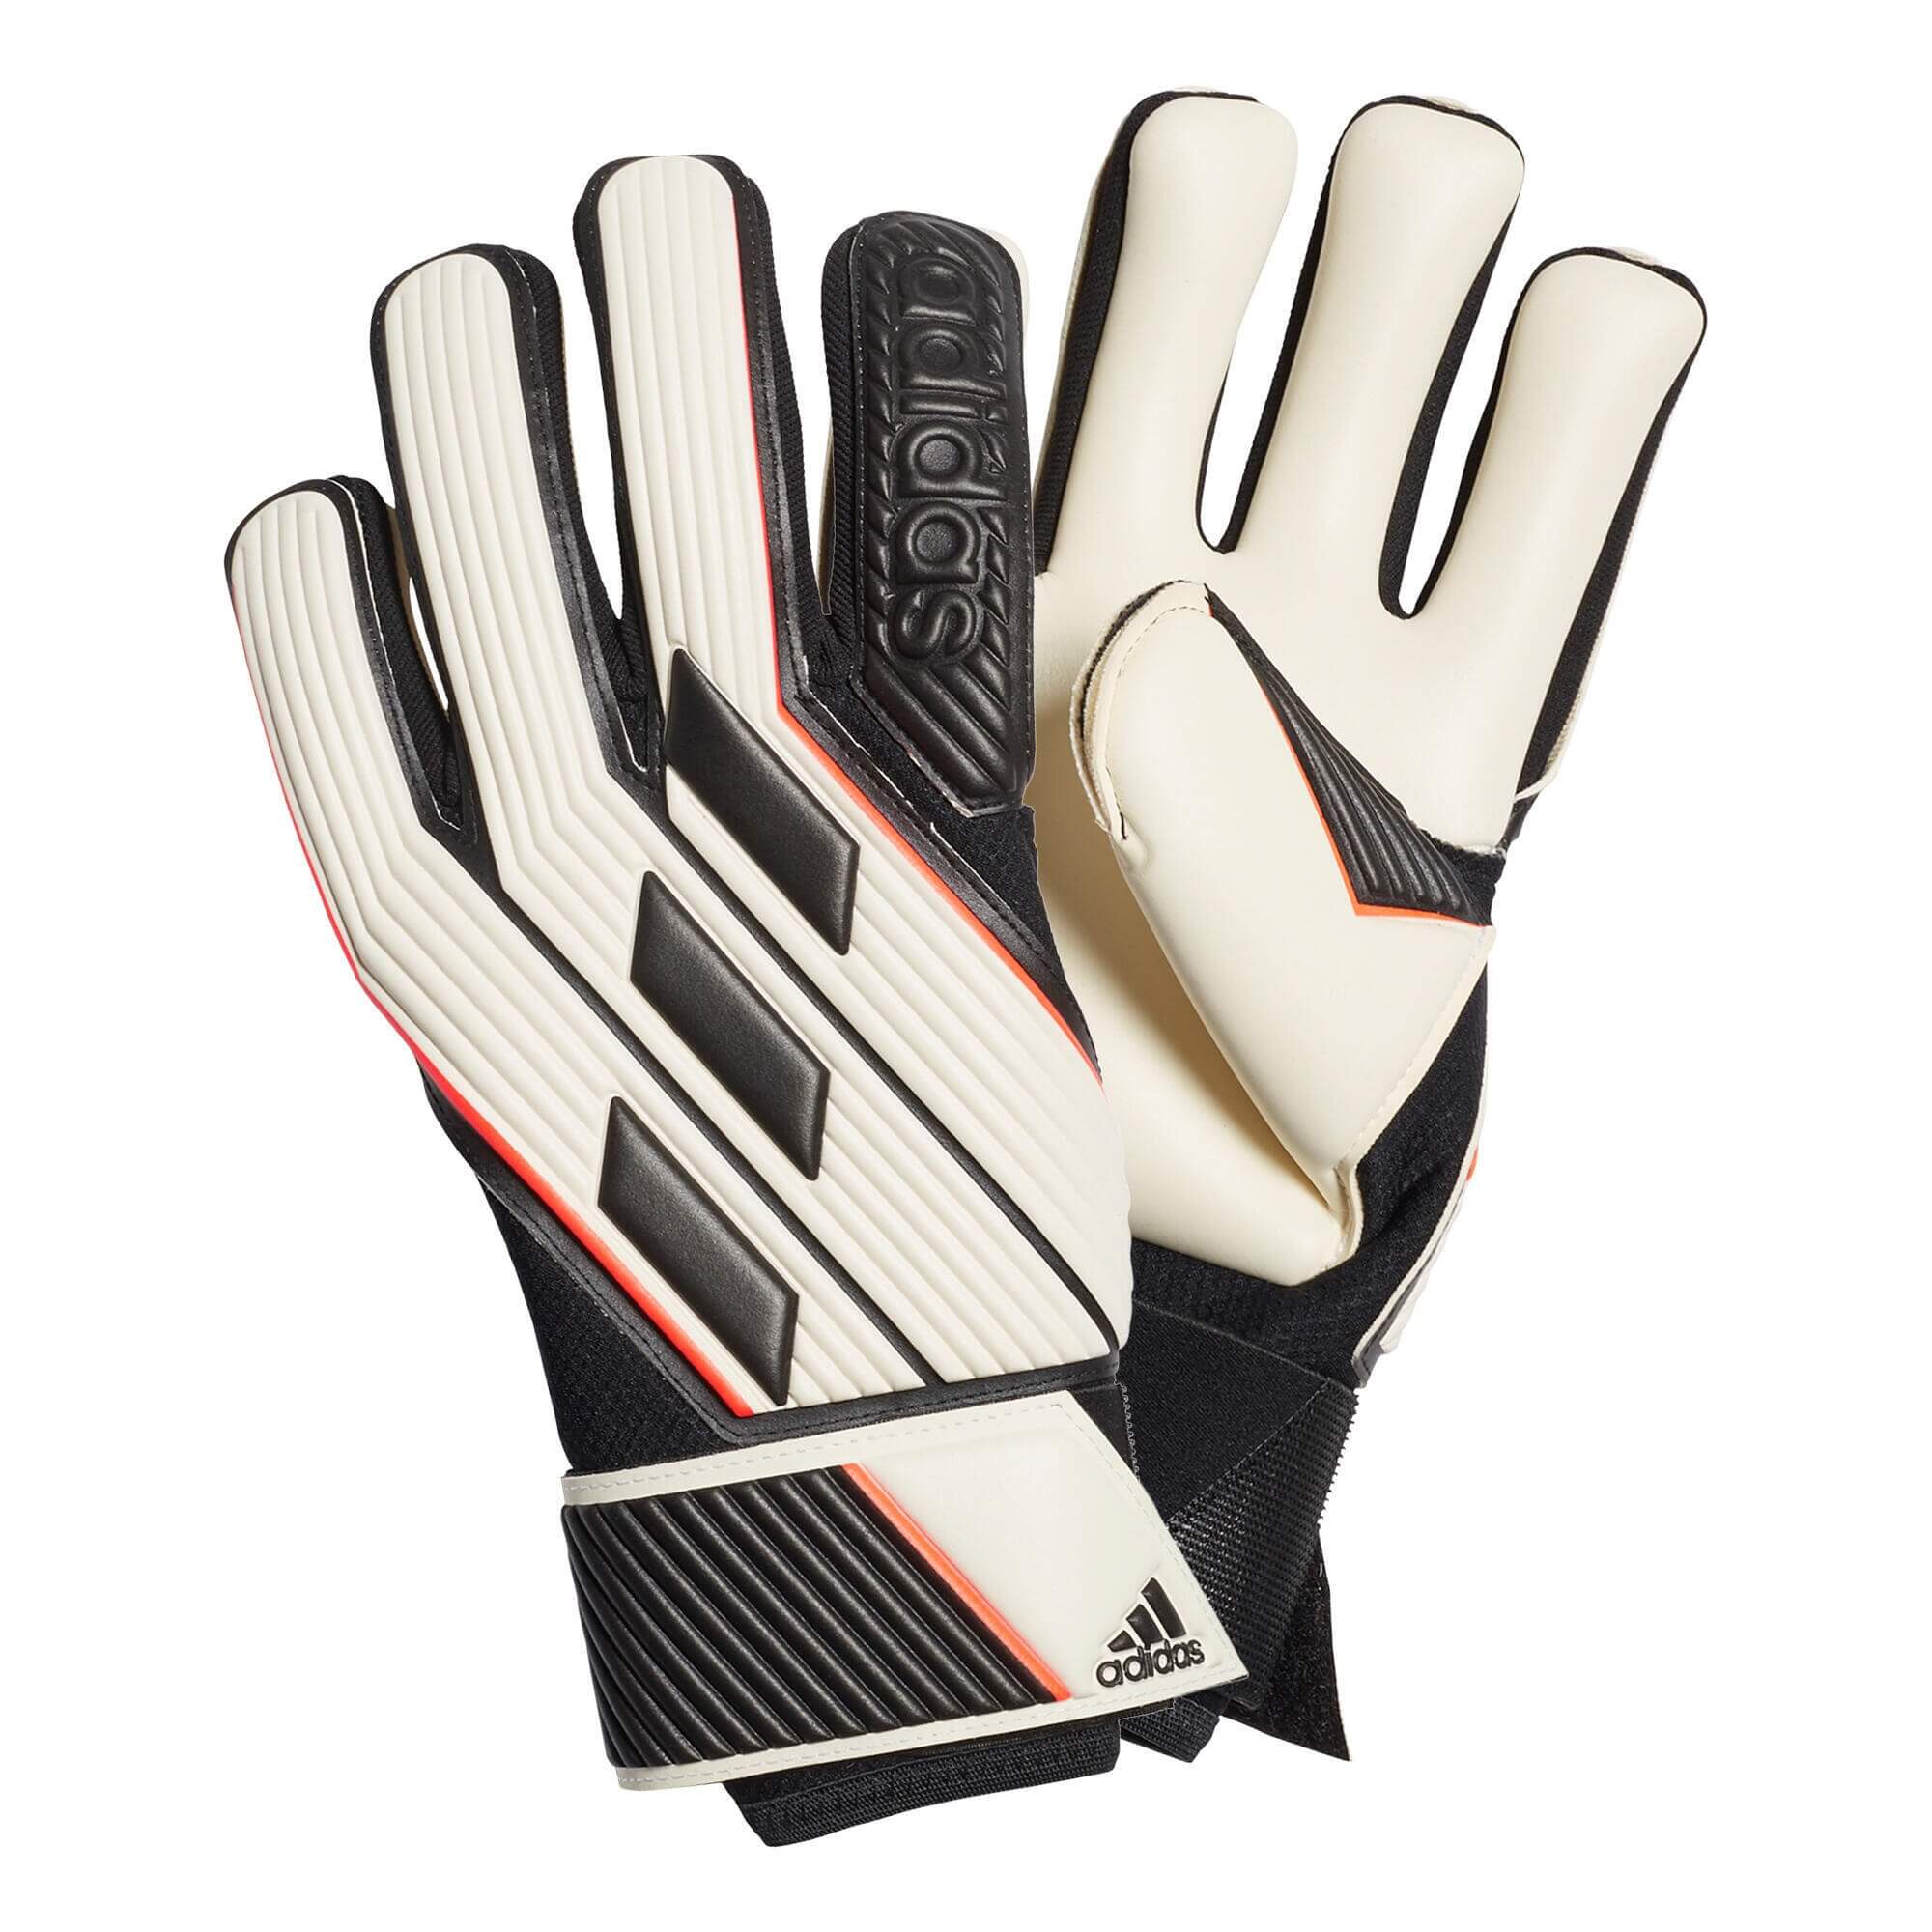 Вратарские перчатки Adidas Tiro Glove Pro, белый/черный перчатки вратарские adidas детские pred gl trn j синий